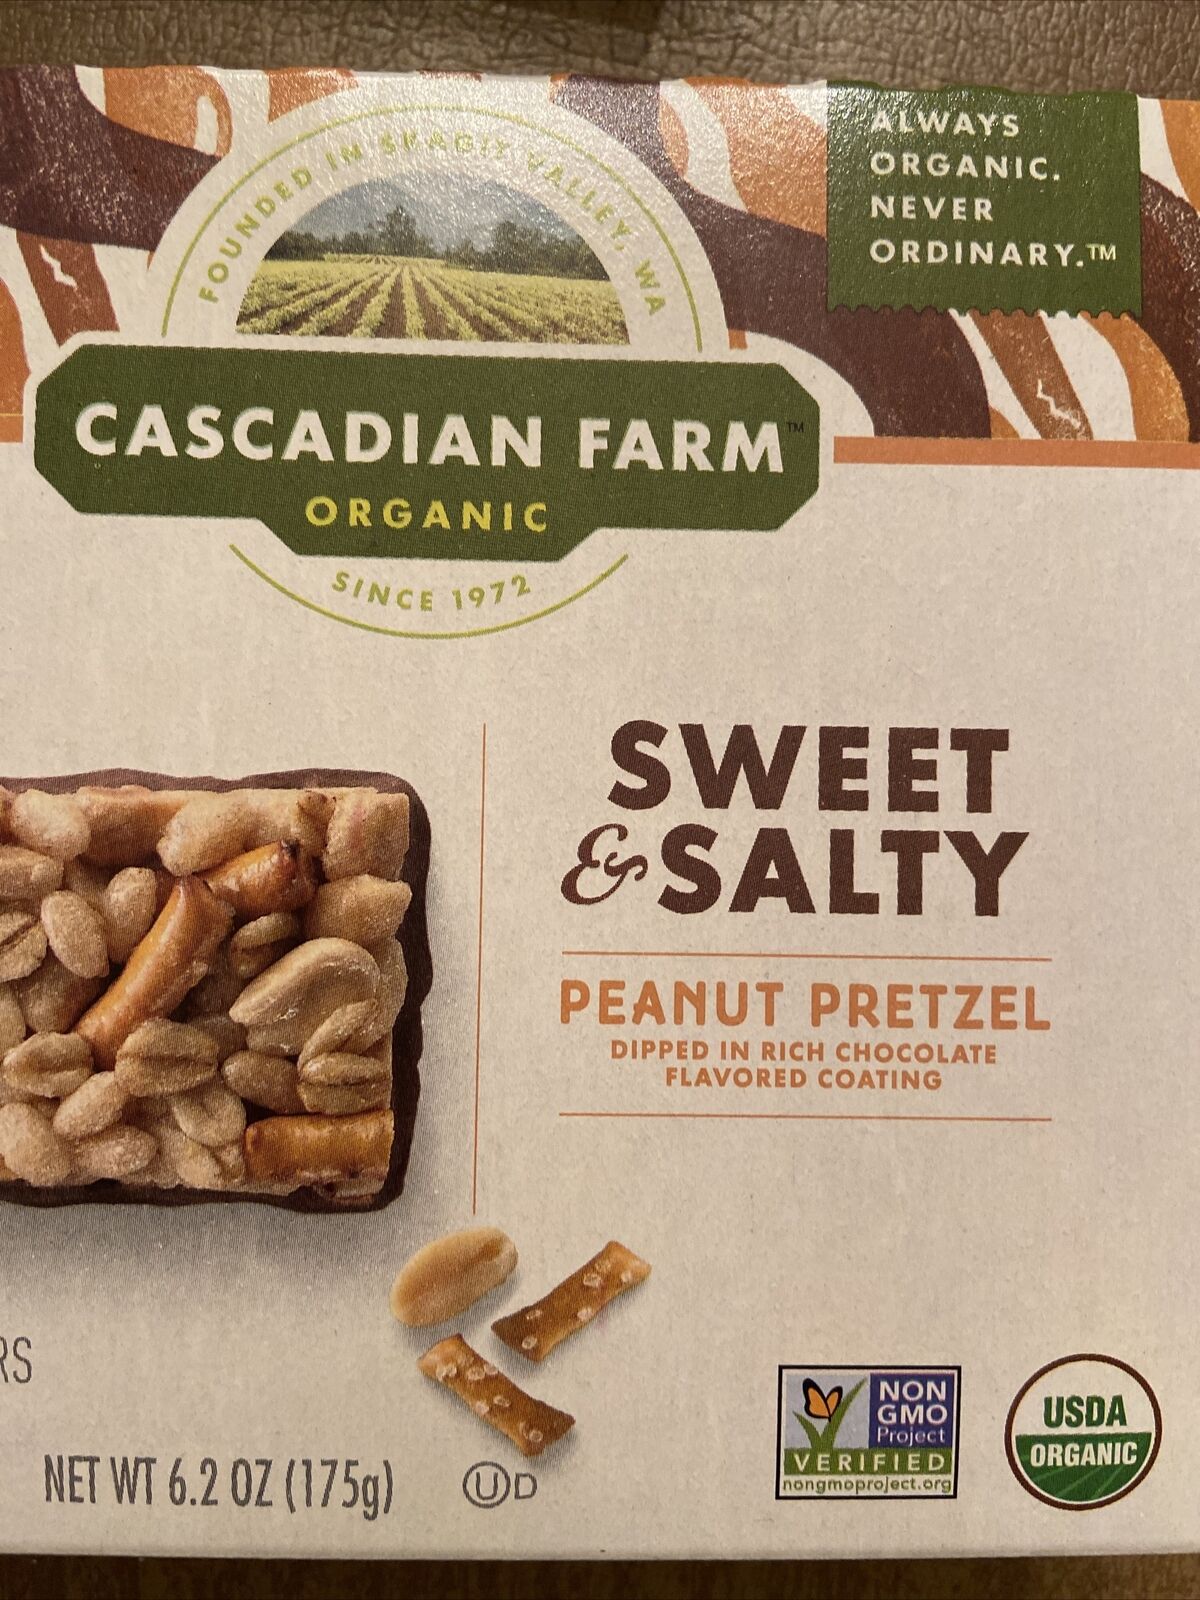 Cascadian Farms Organic Sweet Salty Peanut Pretzel Chocolate Coating Chewy Bars